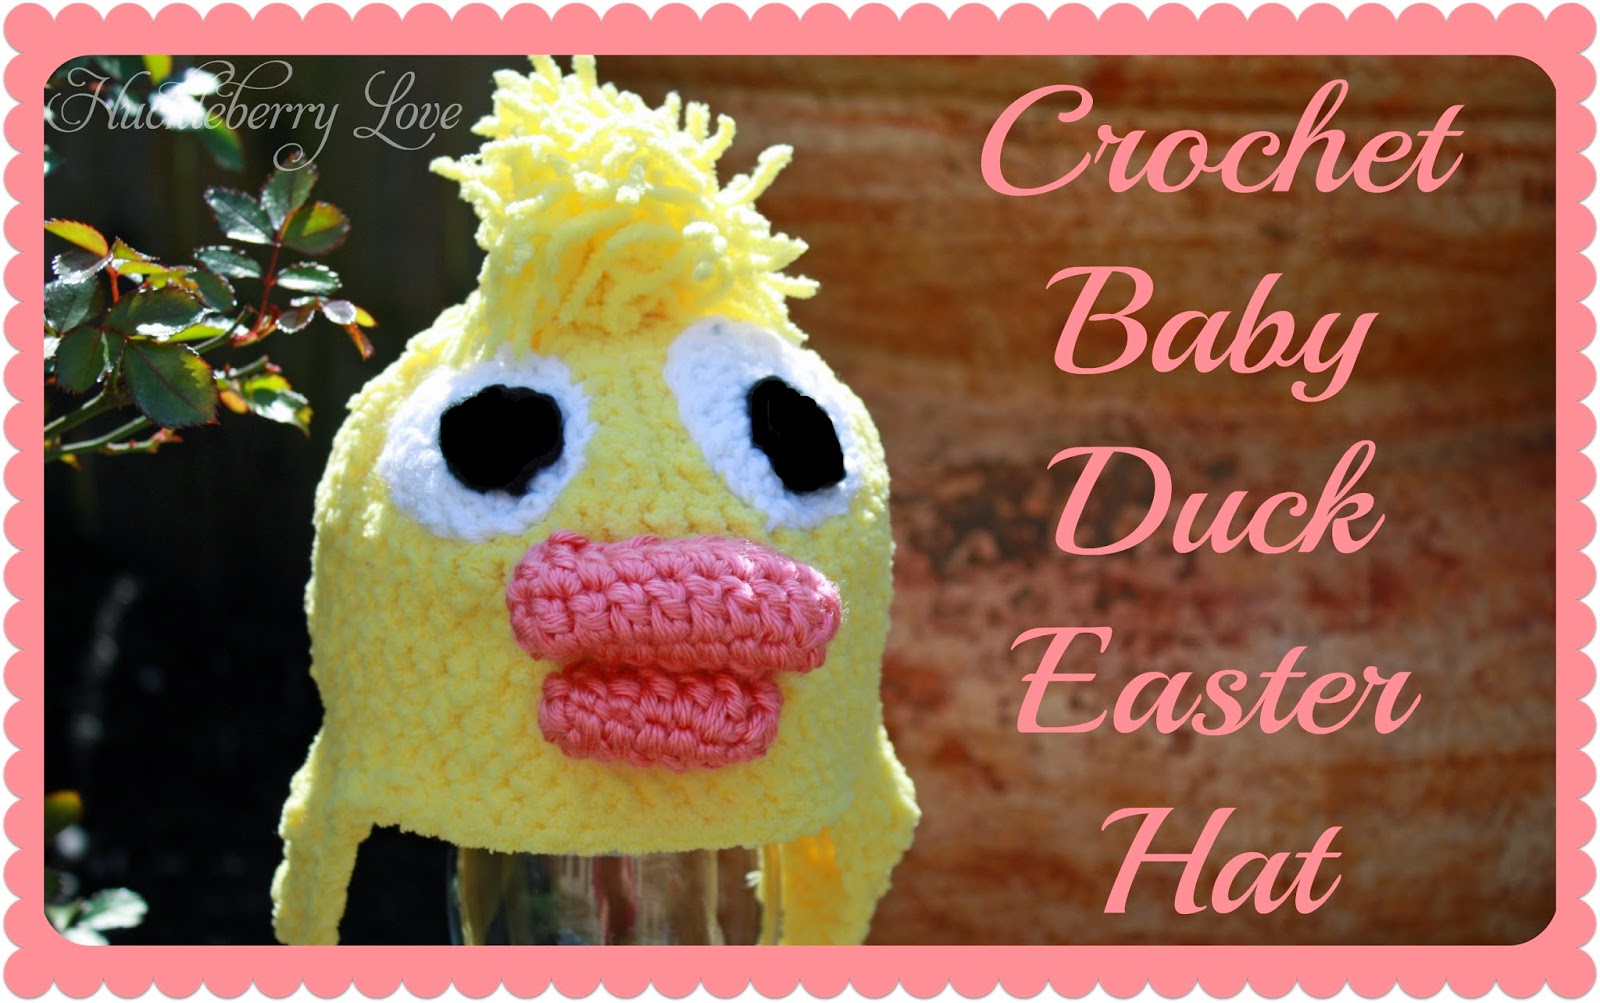 Crochet Baby Duck Easter Hat by Huckleberry Love